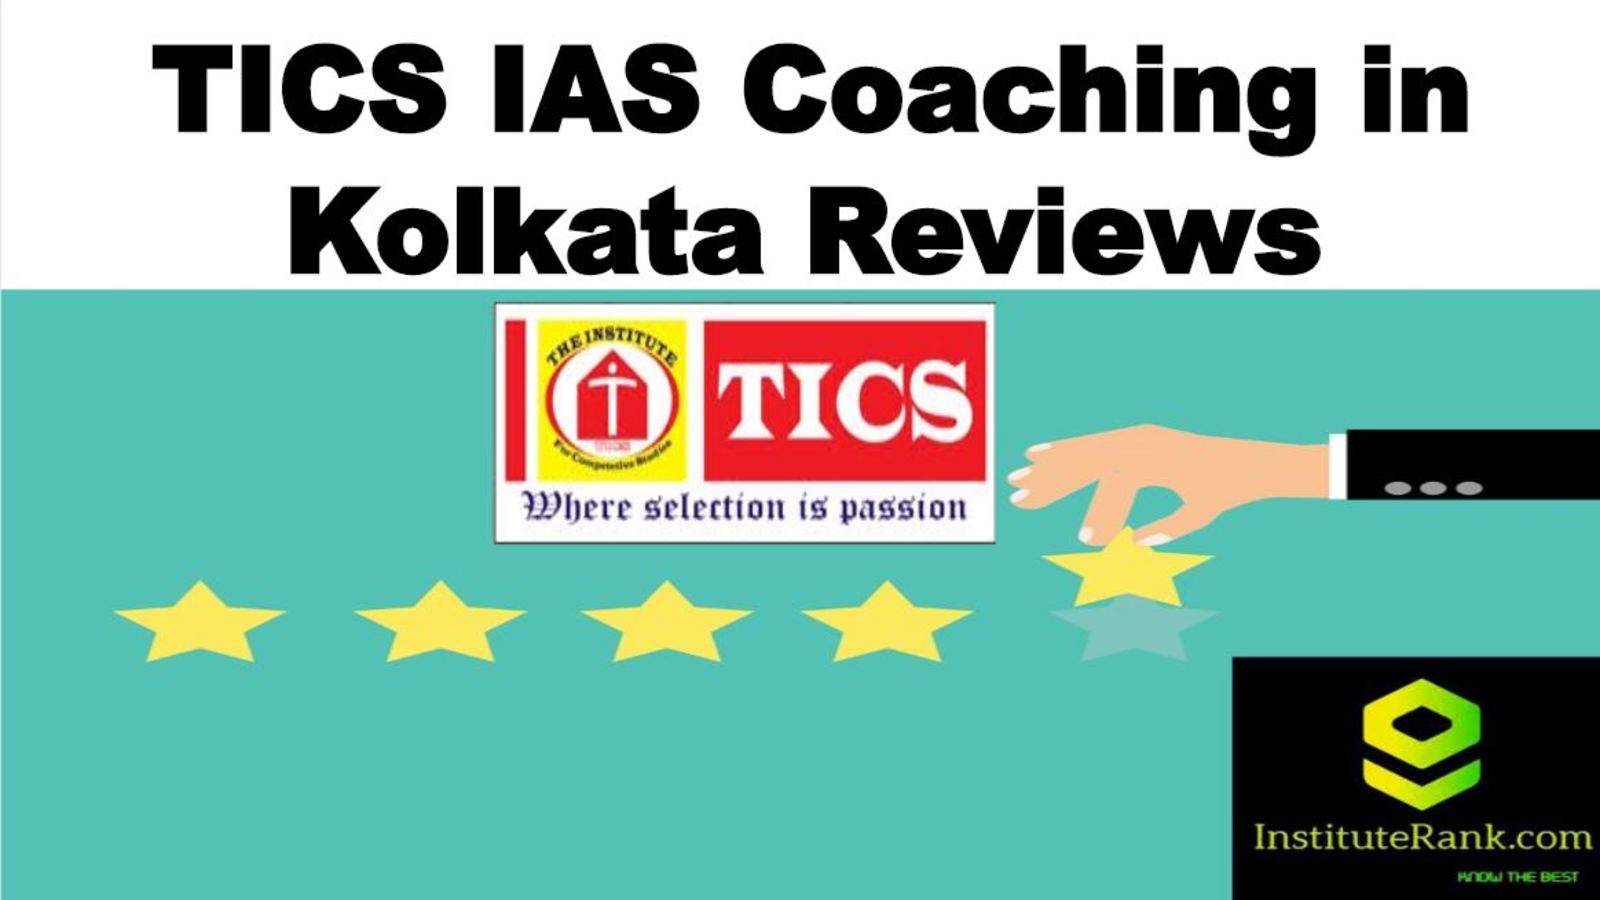 TICS IAS Kolkata Reviews